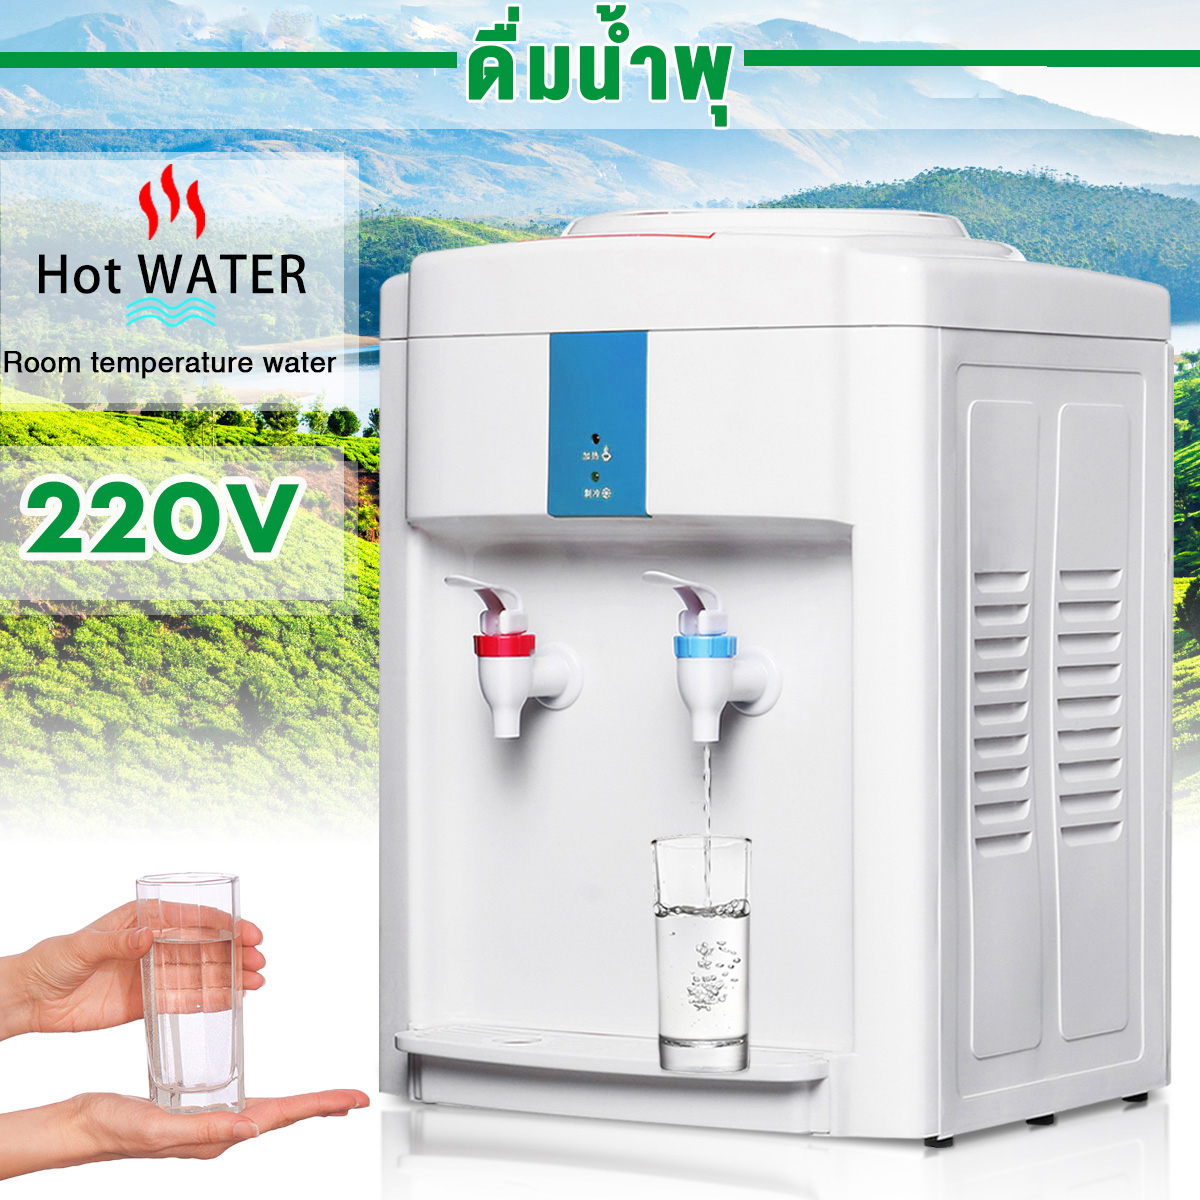 AiThai  เครื่องกดน้ำดื่ม ตู้กดน้ำดื่ม เครื่องกดน้ำตั้งโต๊ะ Drinking fountain เครื่องกดน้ำ ตู้กดน้ำเย็น น้ำร้อน ตู้น้ำเย็น อุณหภูมิ3ระดับ 220V 420W ได้